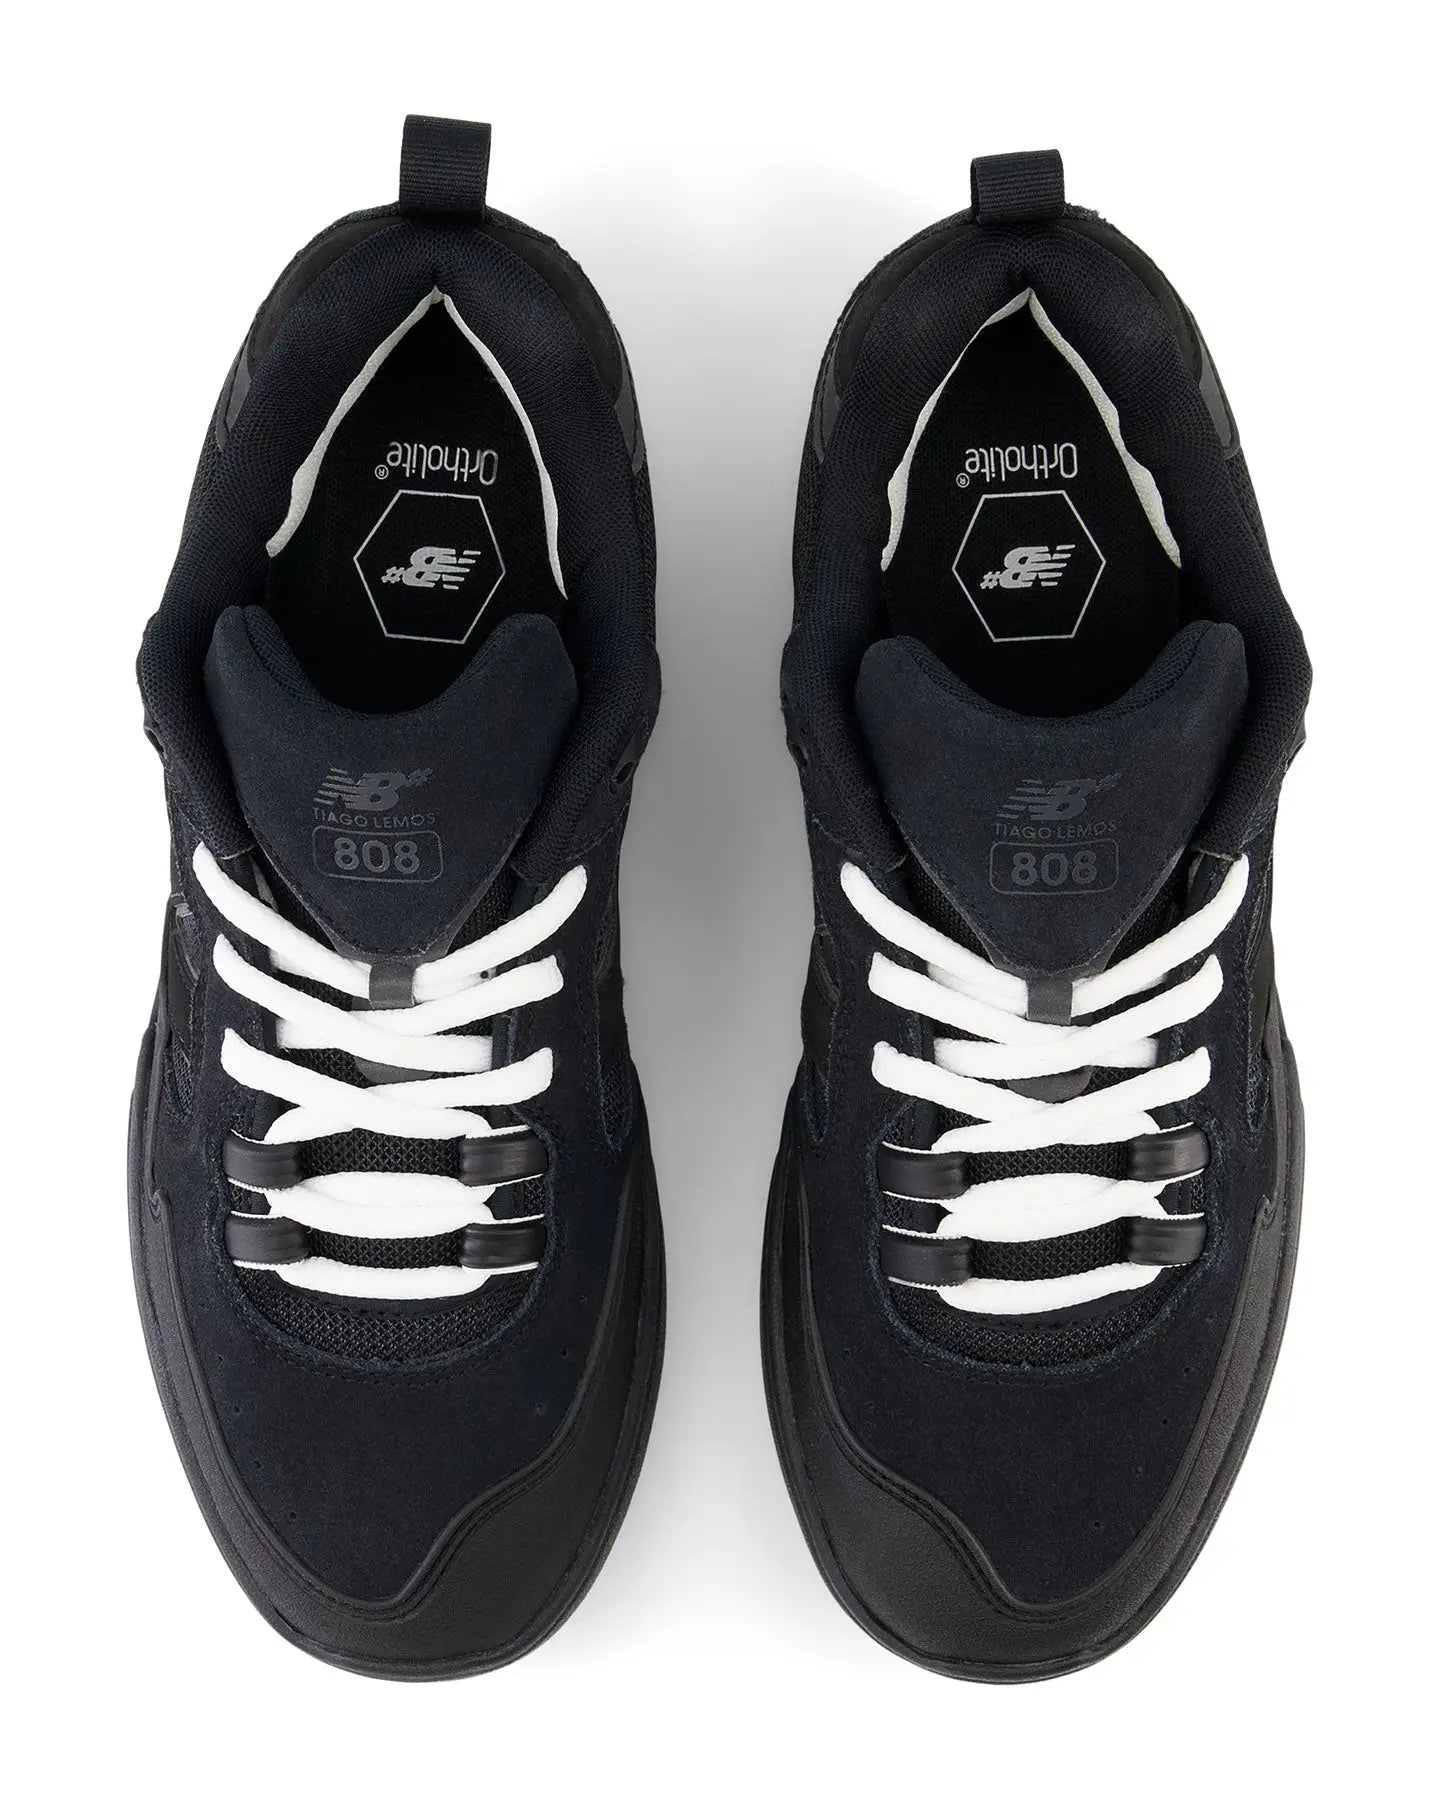 New Balance 808 - Black / Gum Footwear